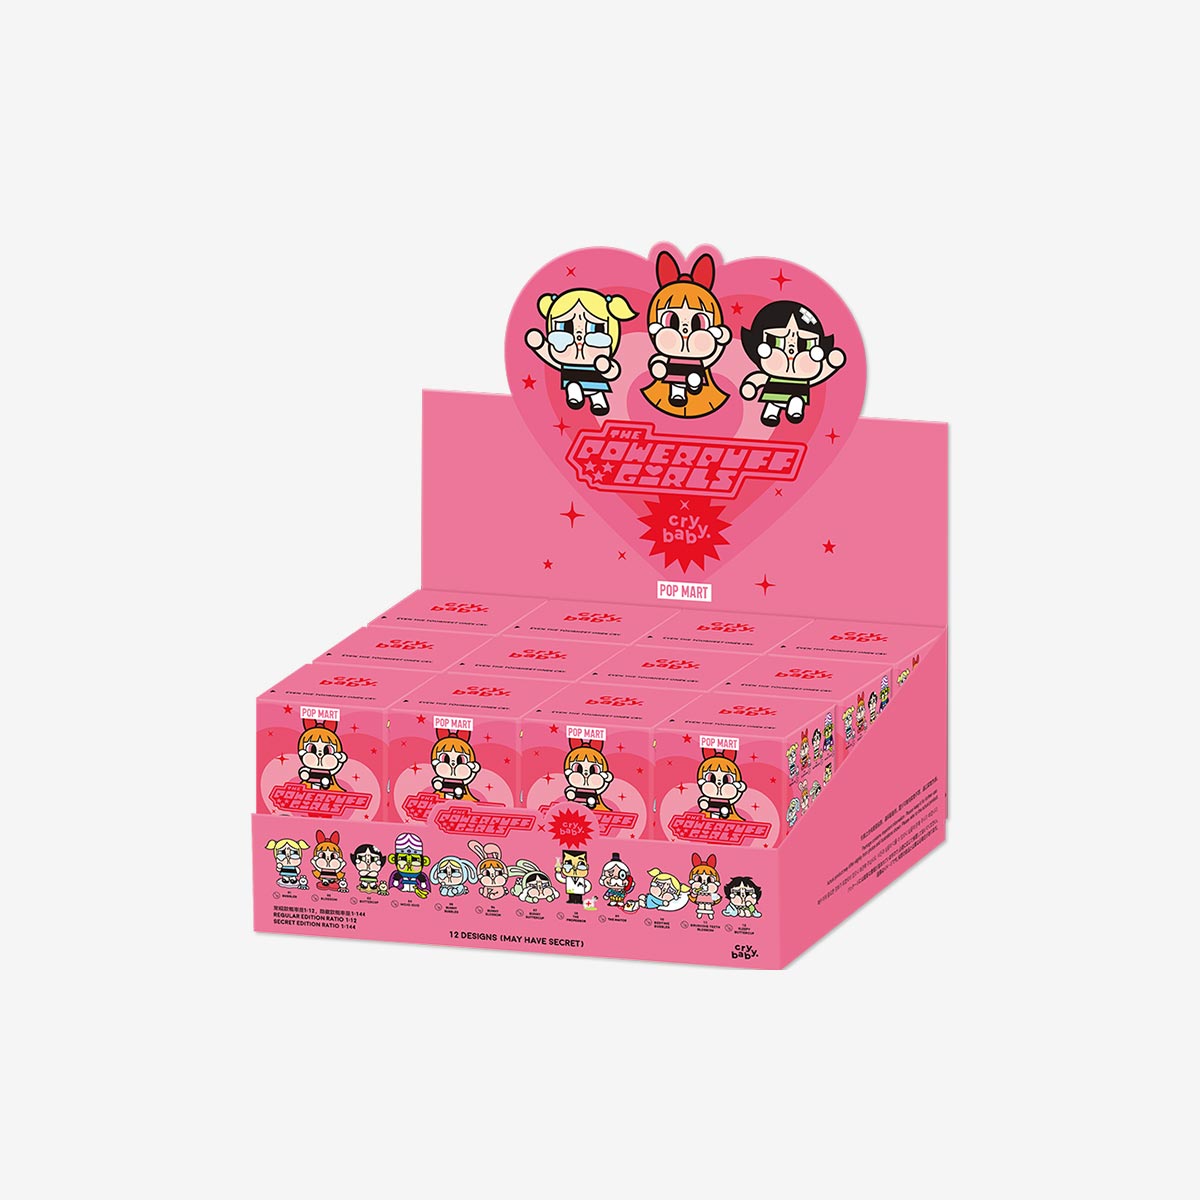 【New】CRYBABY x Powerpuff Girls Series Figures Blind Box